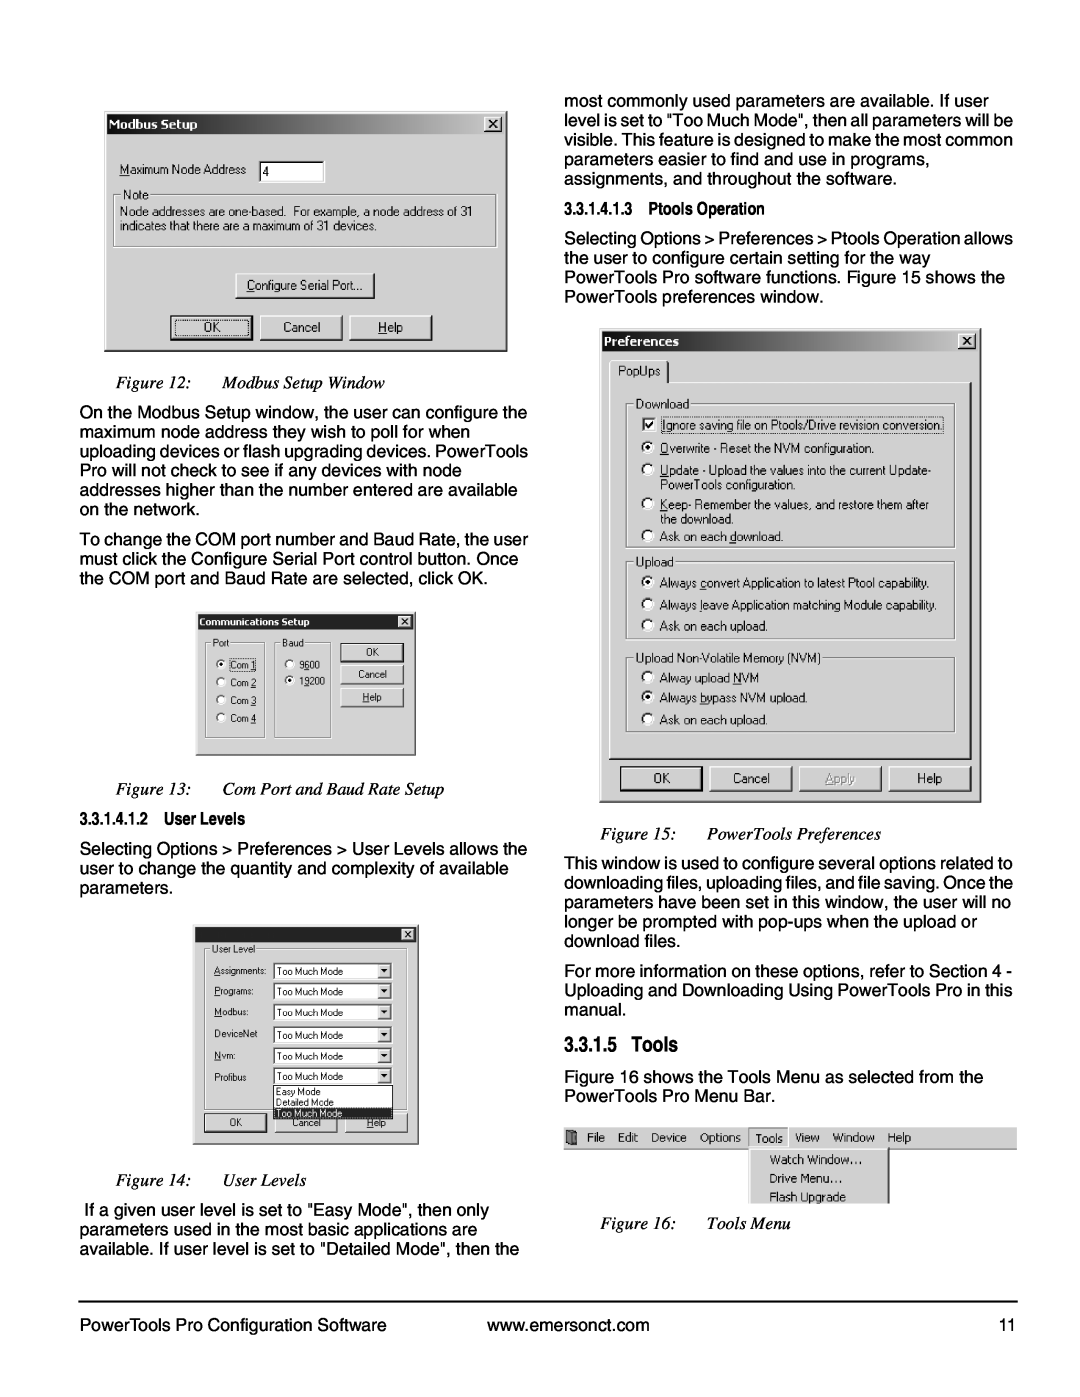 Emerson P/N 400361-00 manual Modbus Setup Window, Com Port and Baud Rate Setup, PowerTools Preferences, User Levels 